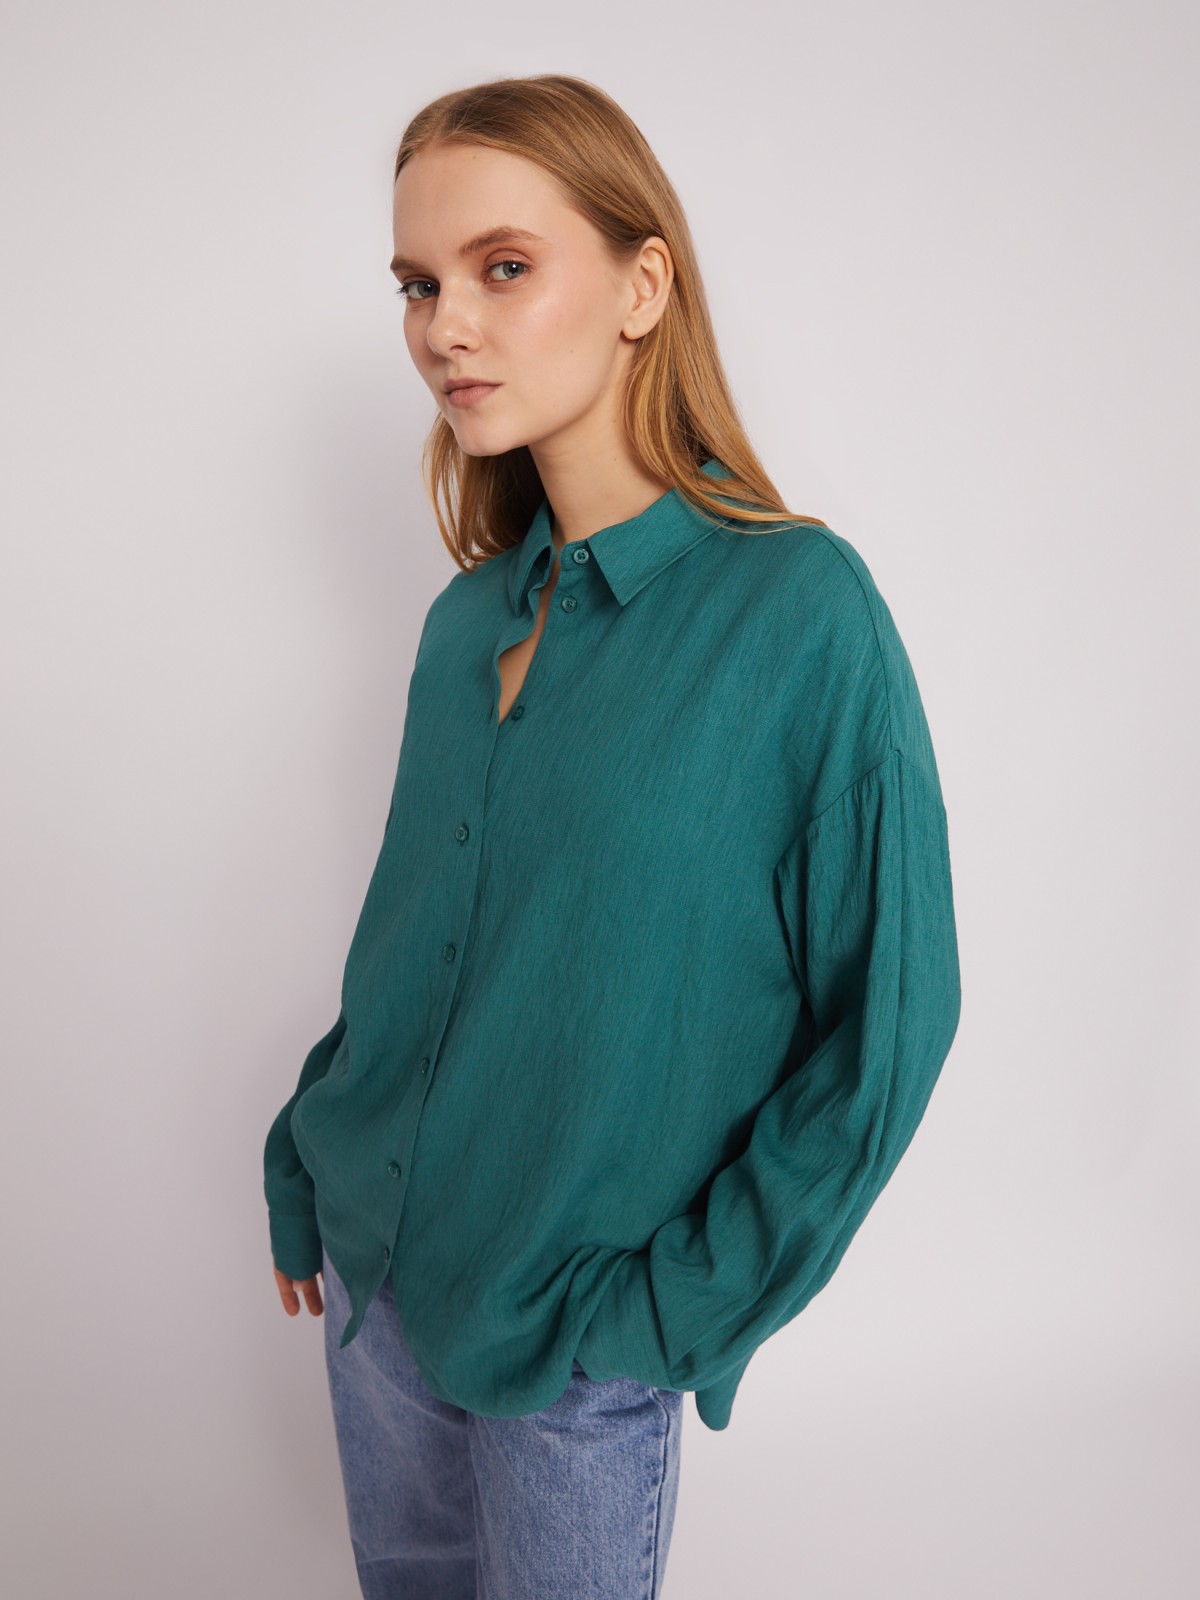 Рубашка оверсайз силуэта с длинным рукавом zolla 02421117Y022, цвет зеленый, размер XS - фото 4